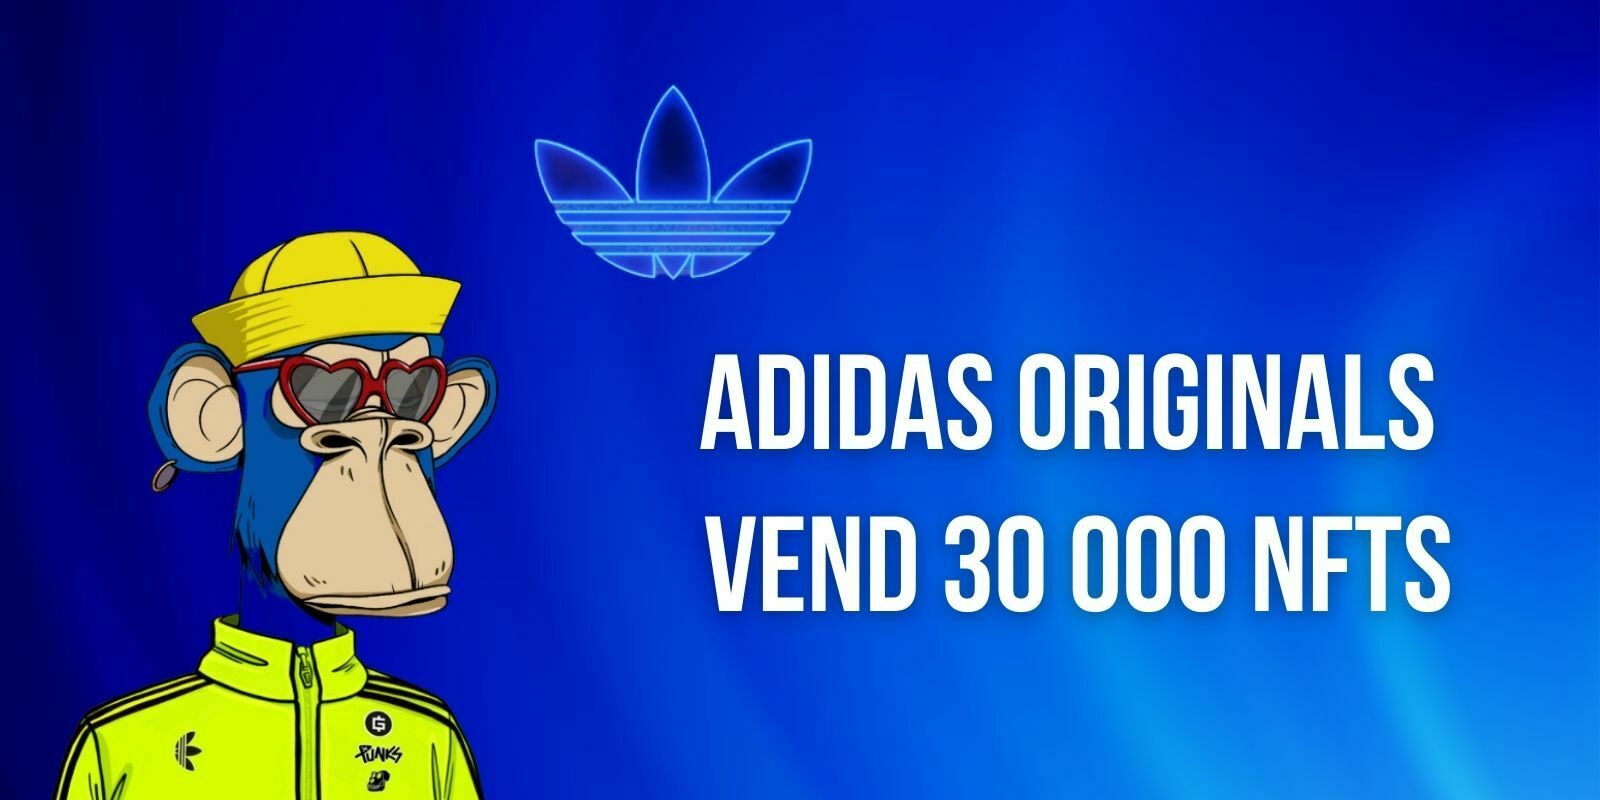 Adidas Originals vend 30 000 NFTs de sa collection « Into the Metaverse »